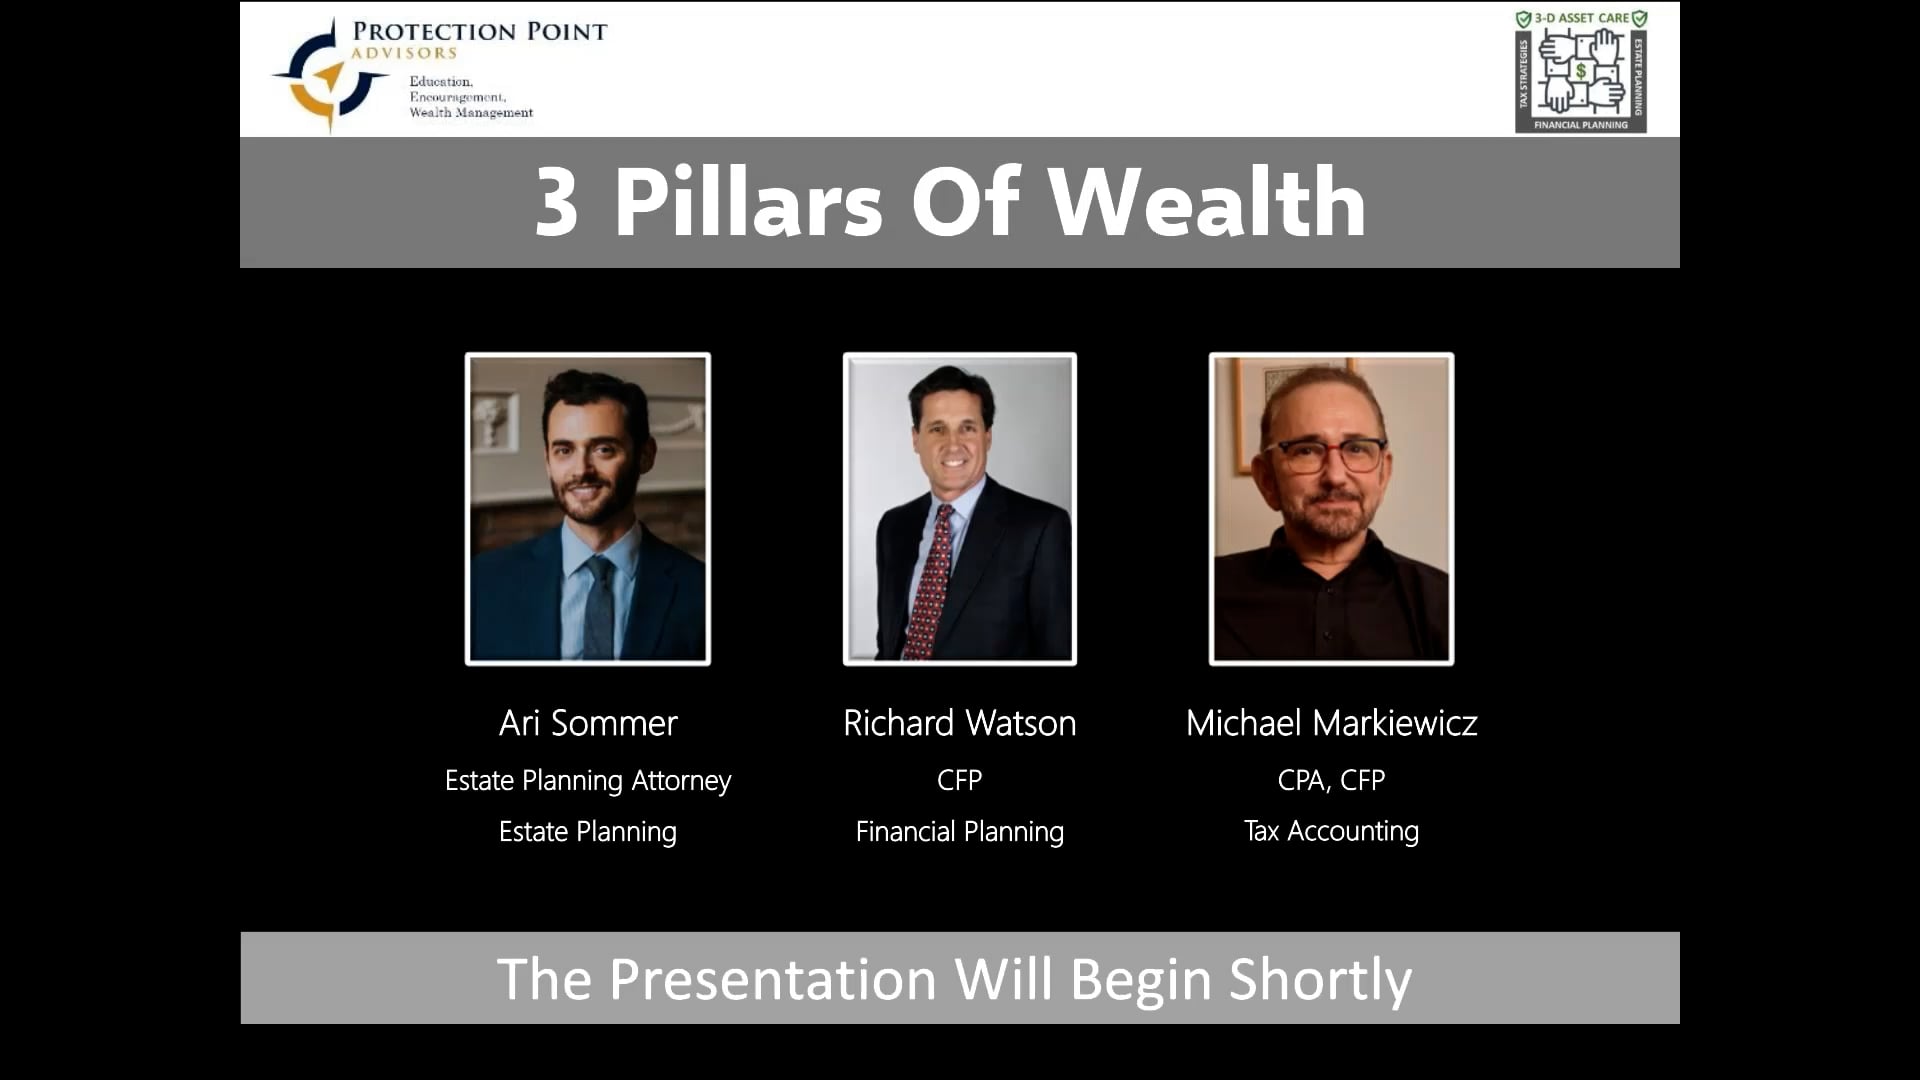 PPA 3D Asset Care: 3 Pillars of Wealth